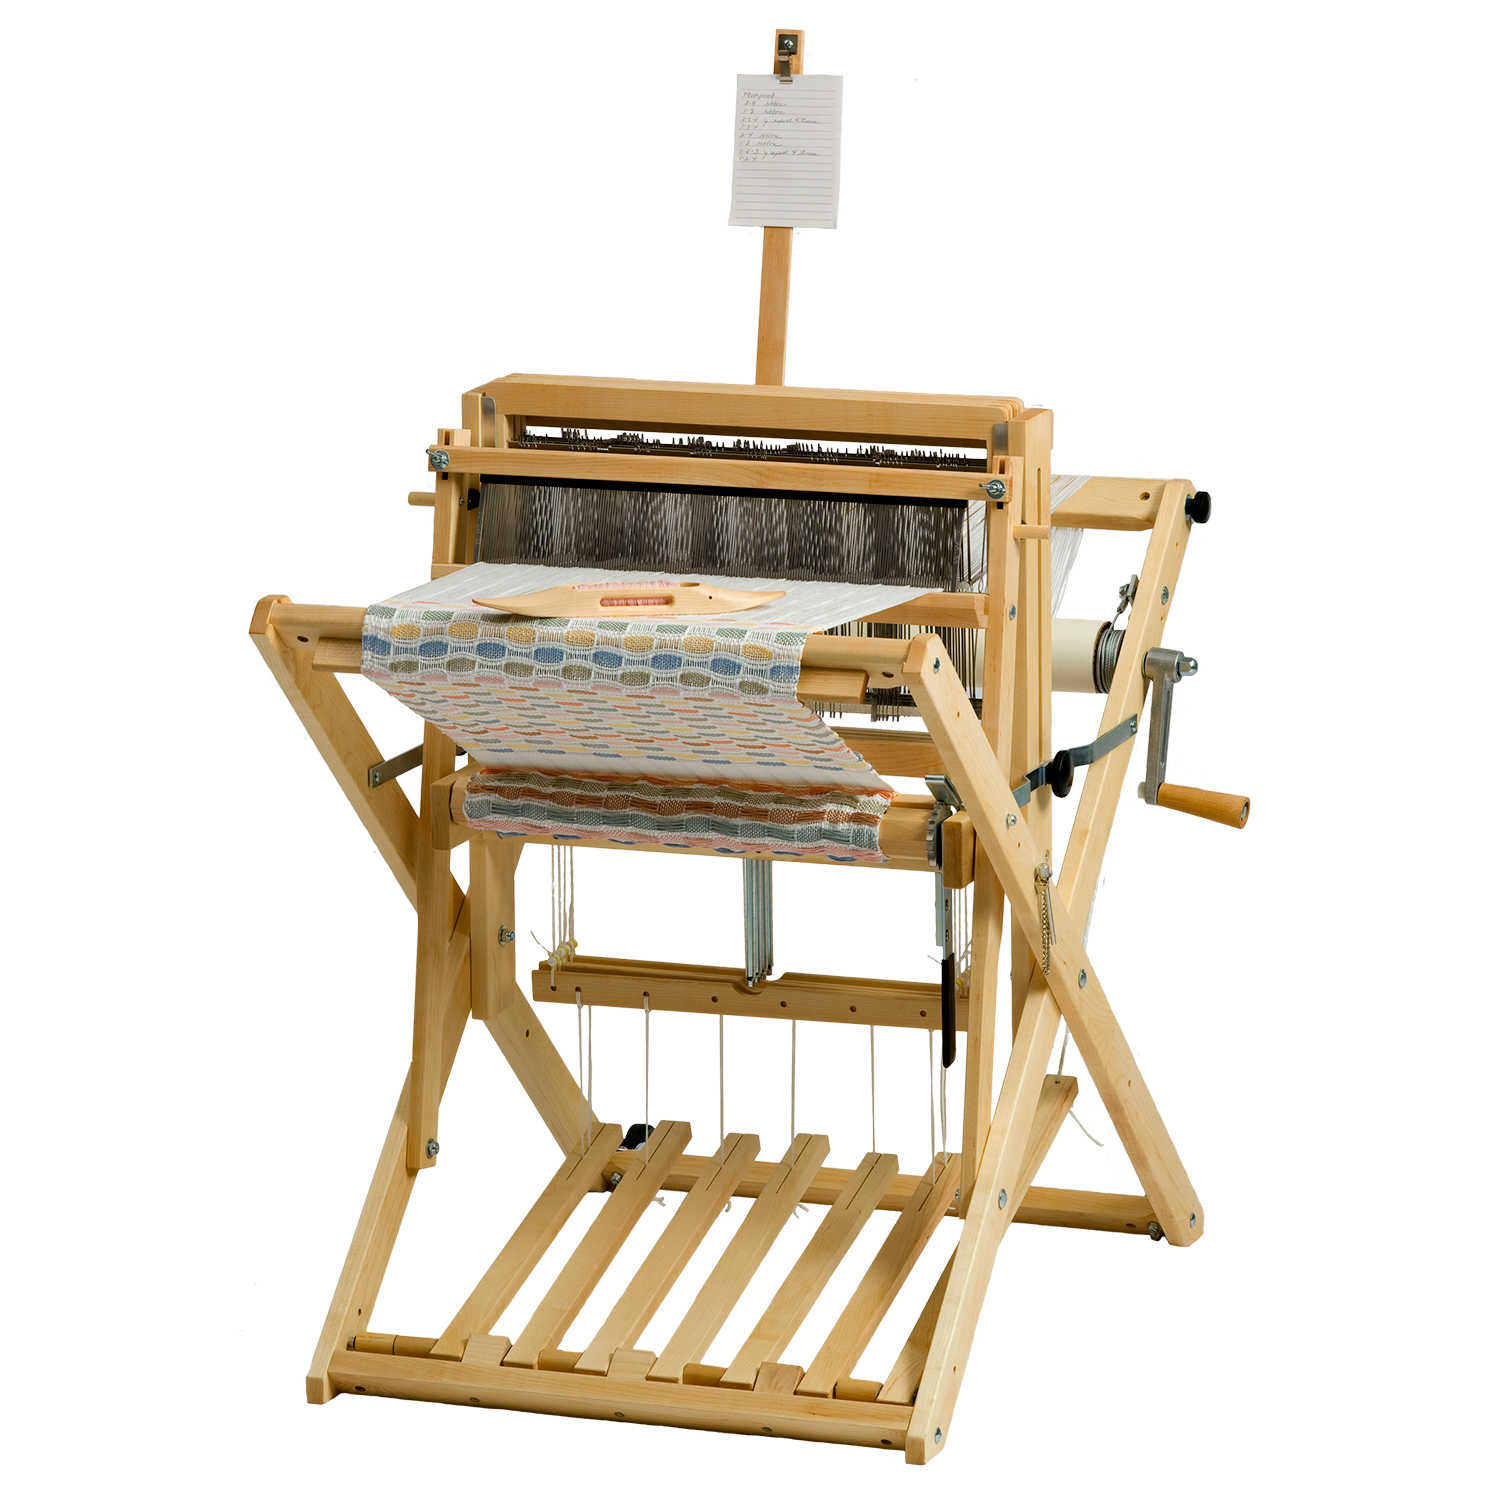 Schacht Mini Loom Weaving Kit – Susan's Fiber Shop